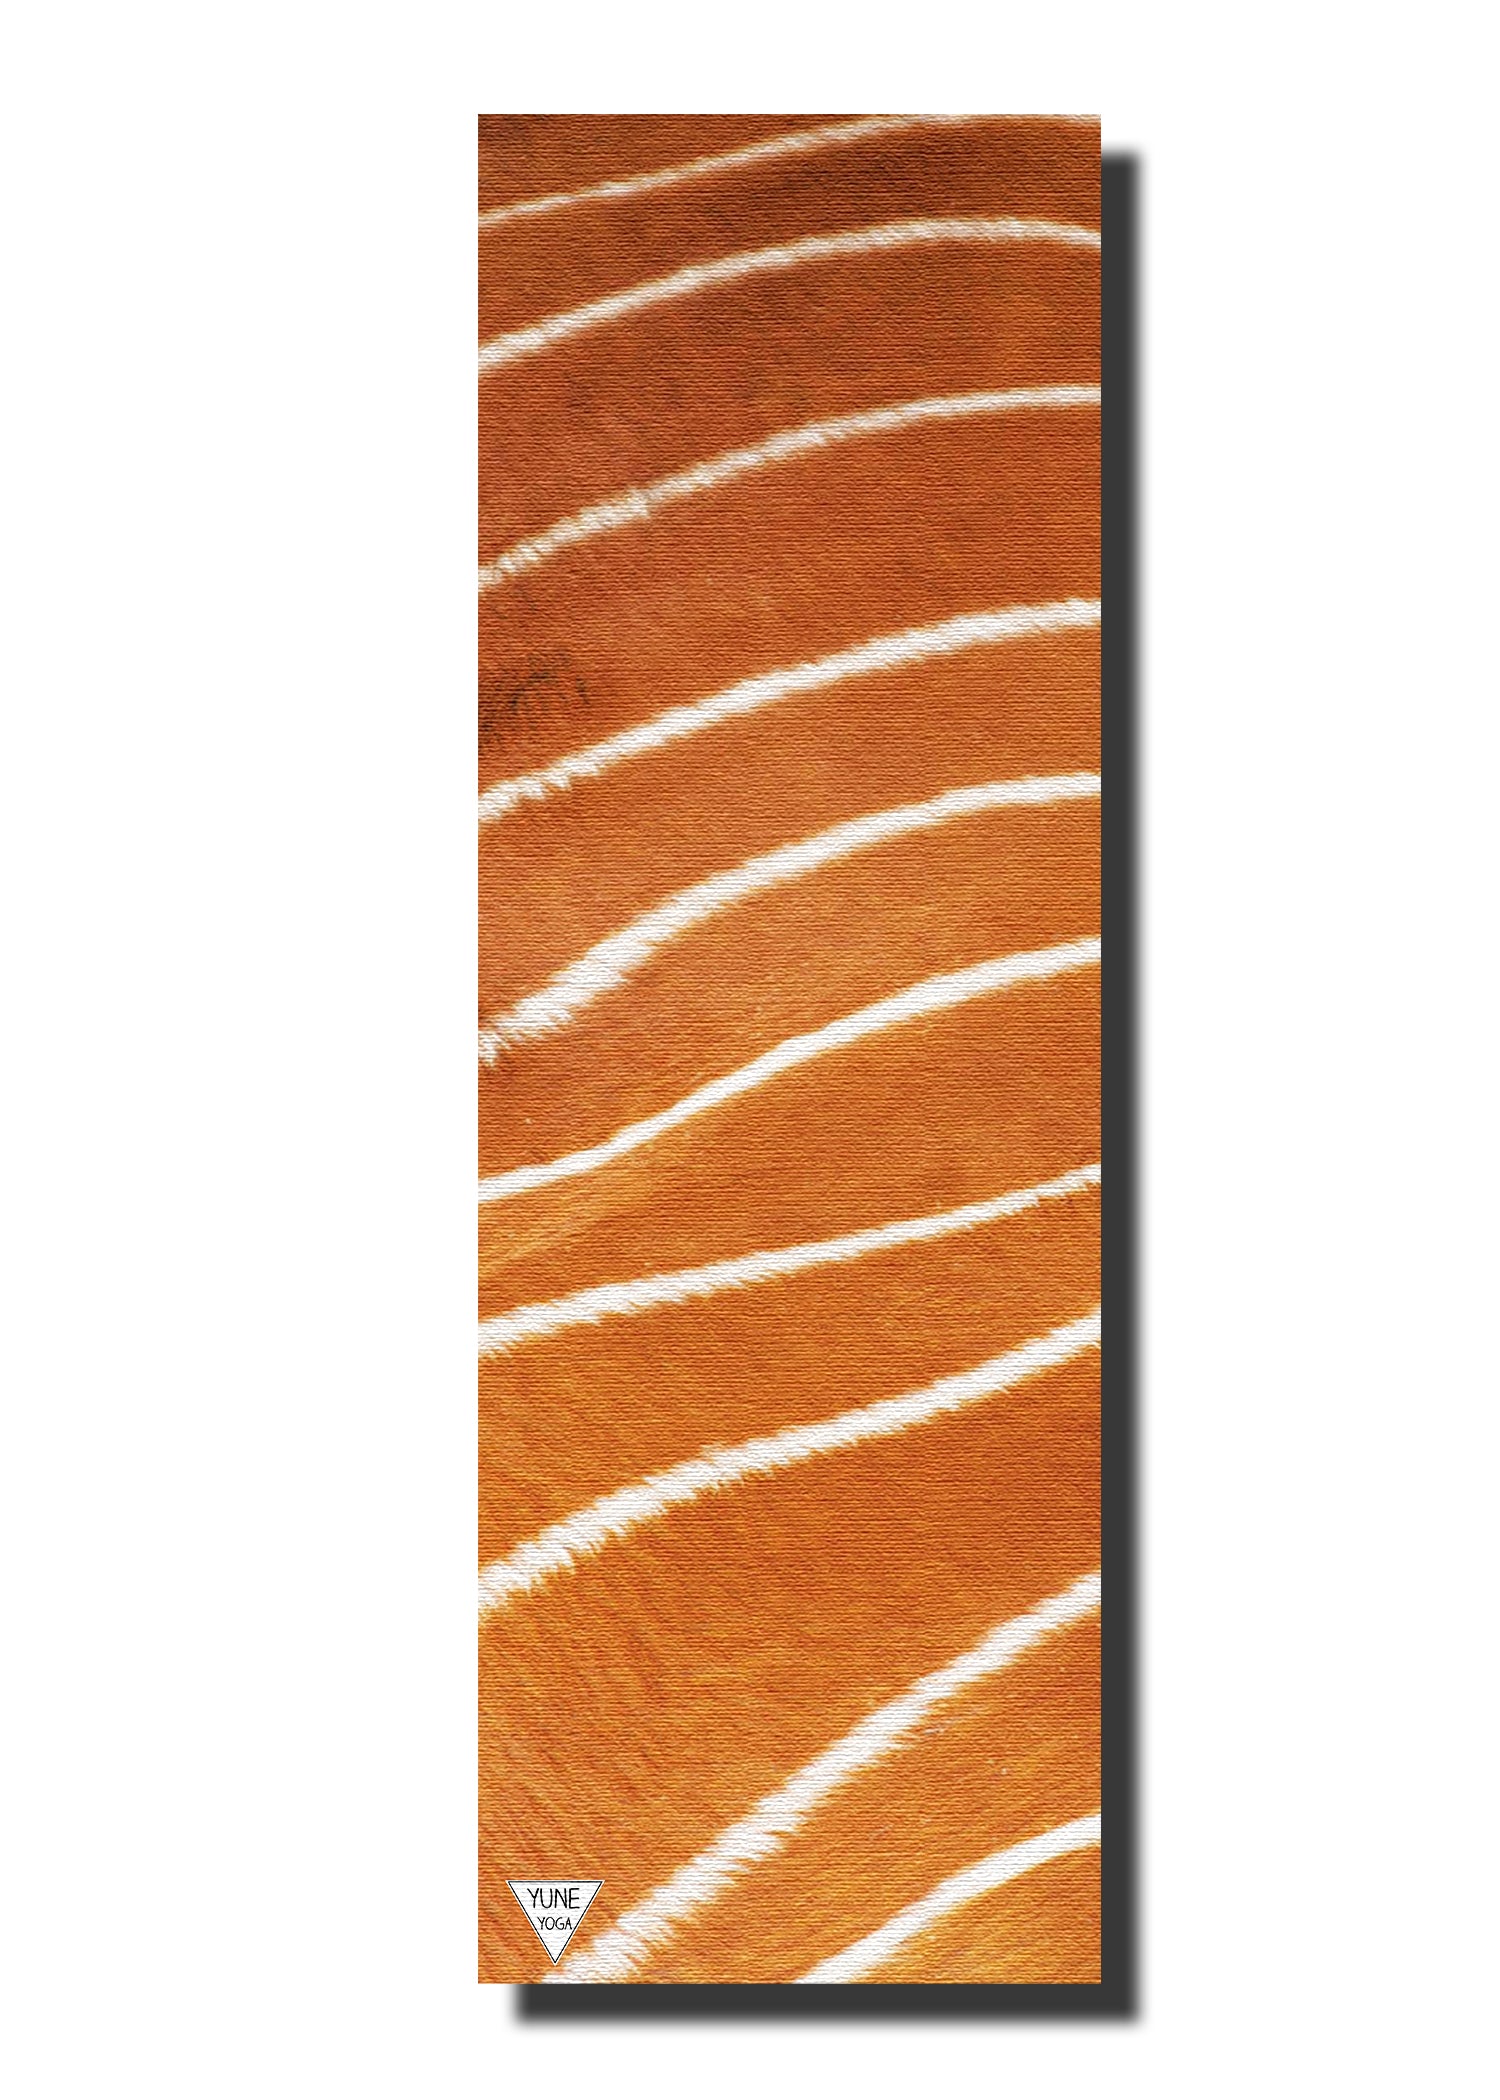 Orange Leopard Print Yoga Mat – GearFrost